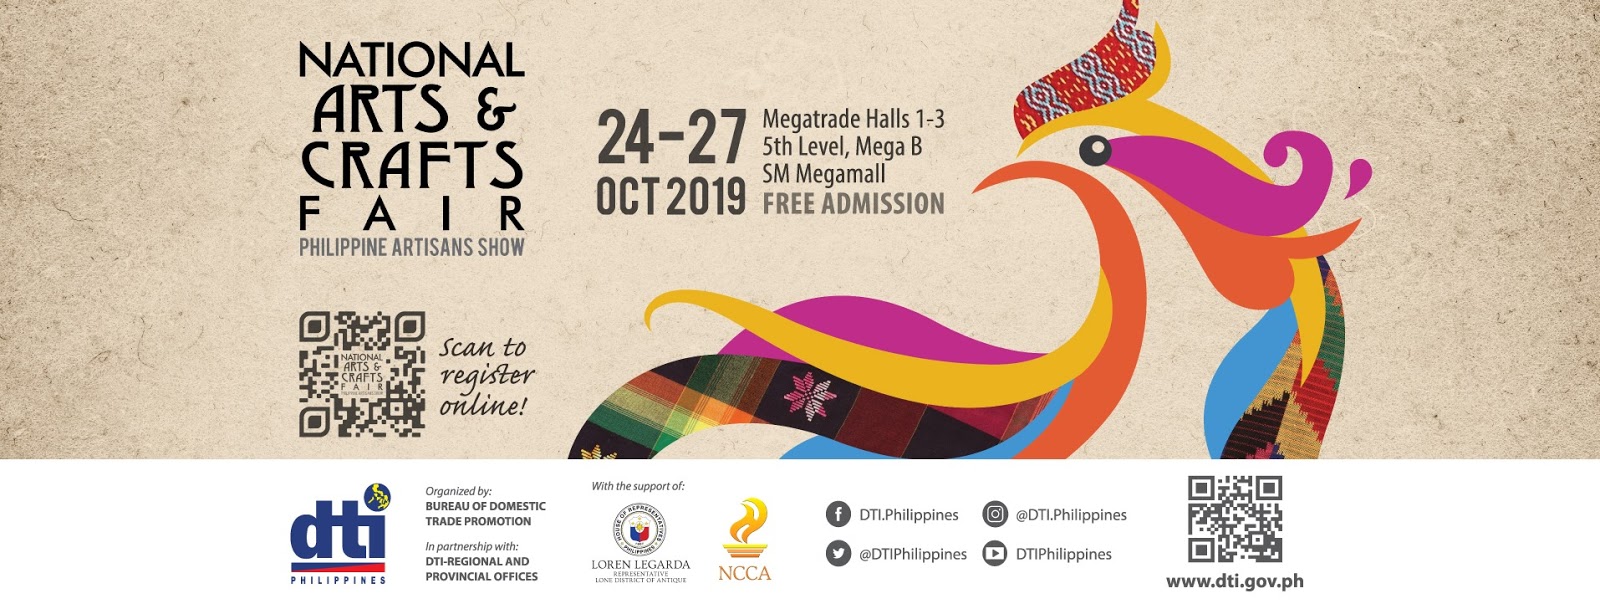 Manila Shopper: National Arts & Crafts Fair at SM Megatrade: Oct 2019